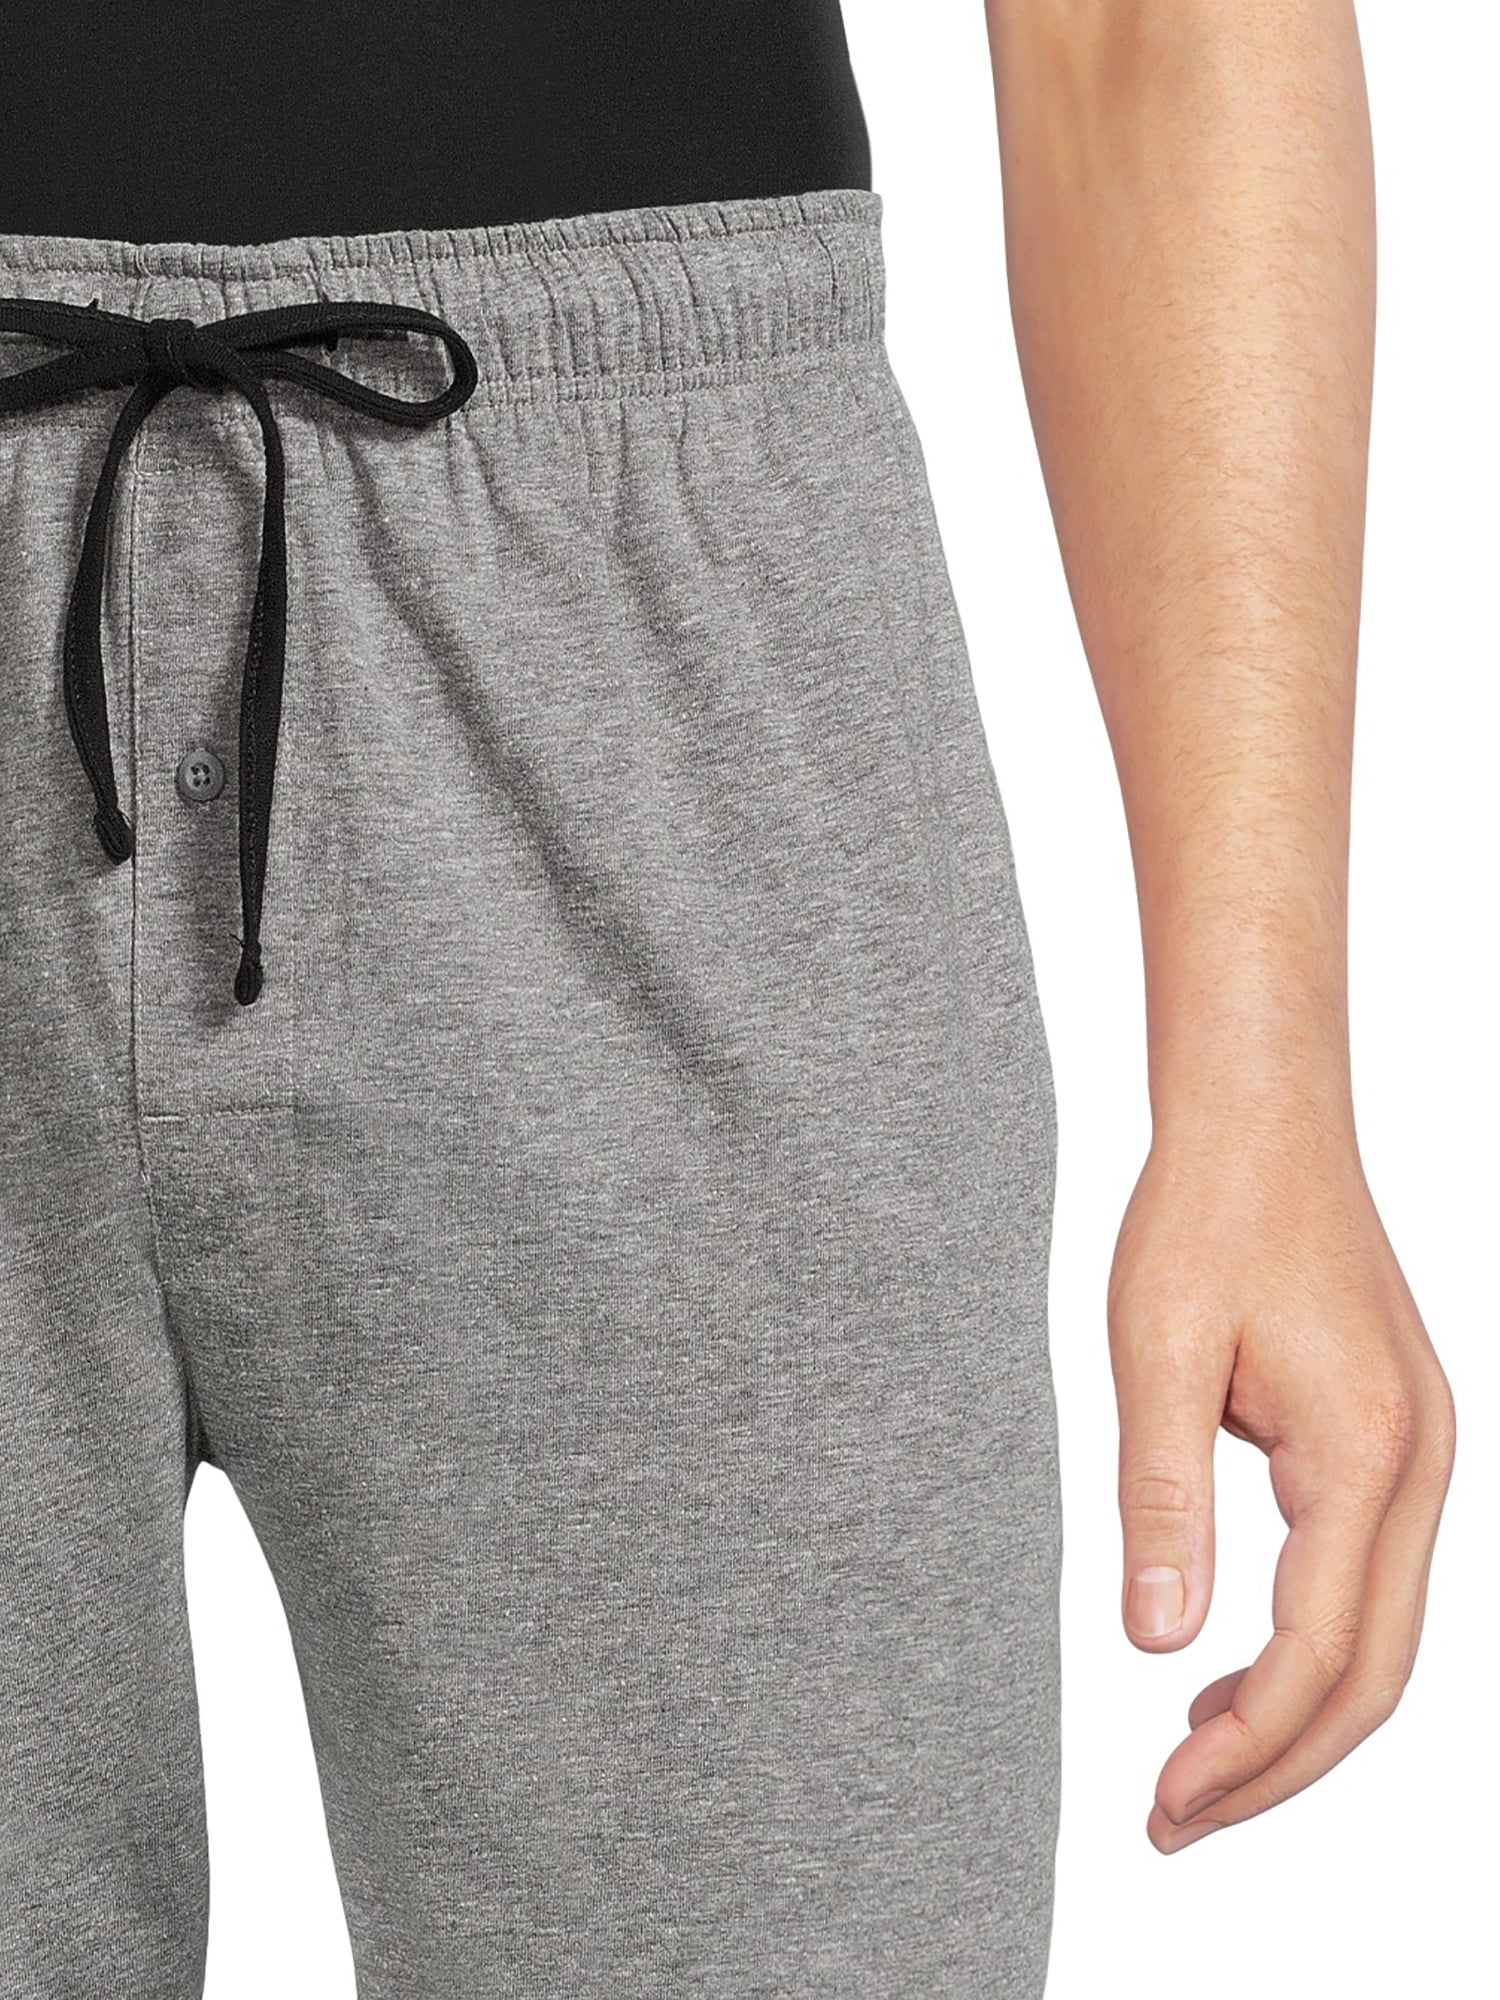 George Men's Solid Knit Pajama Pants 